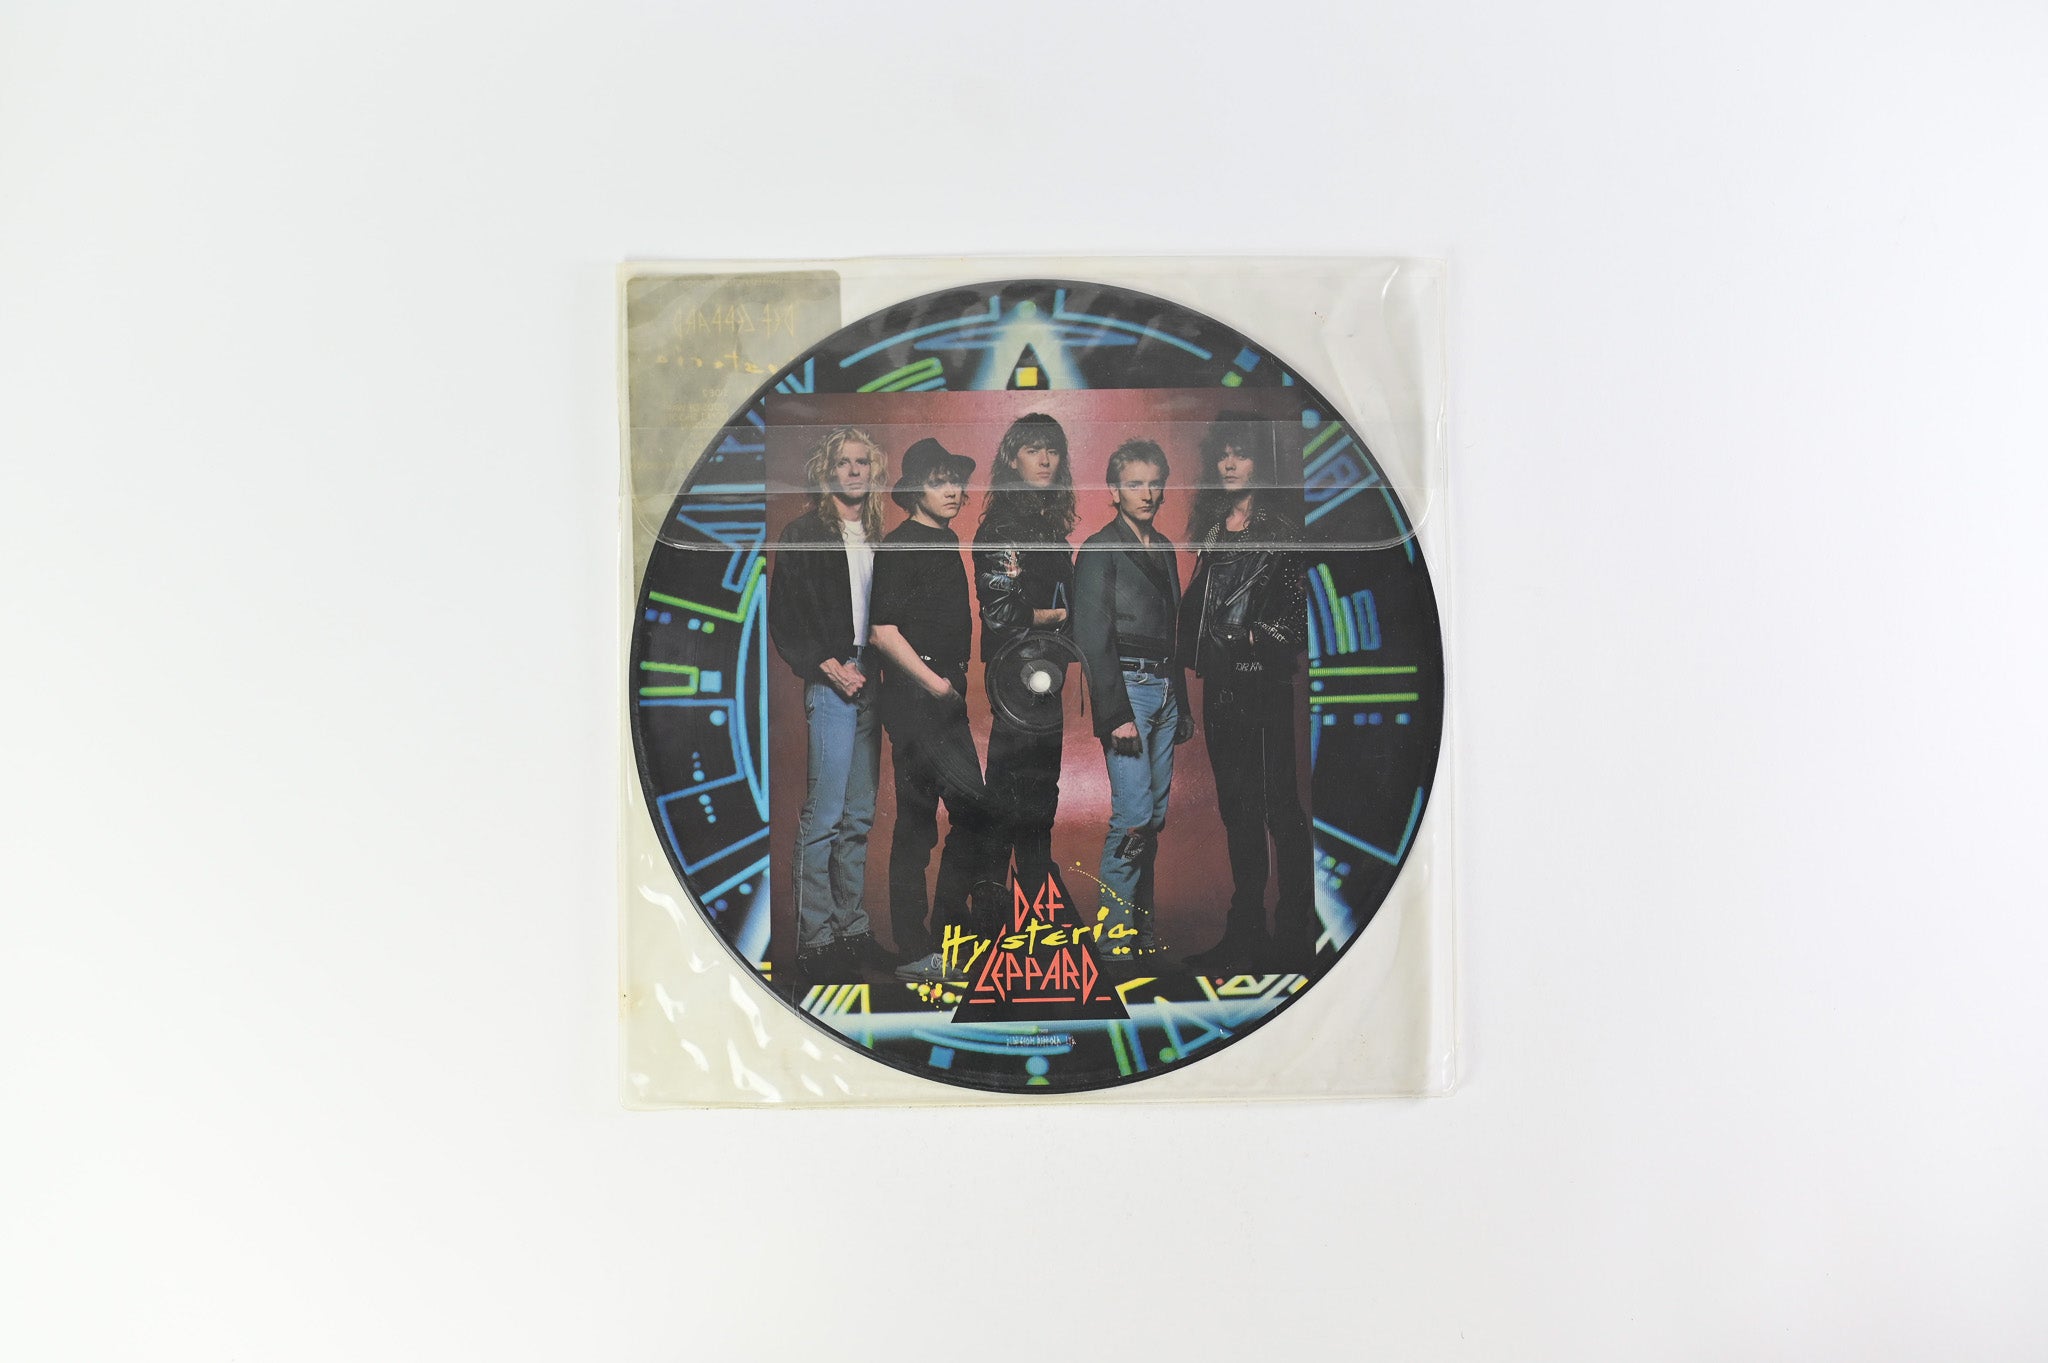 Def Leppard - Hysteria on Mercury Ltd Picture Disc